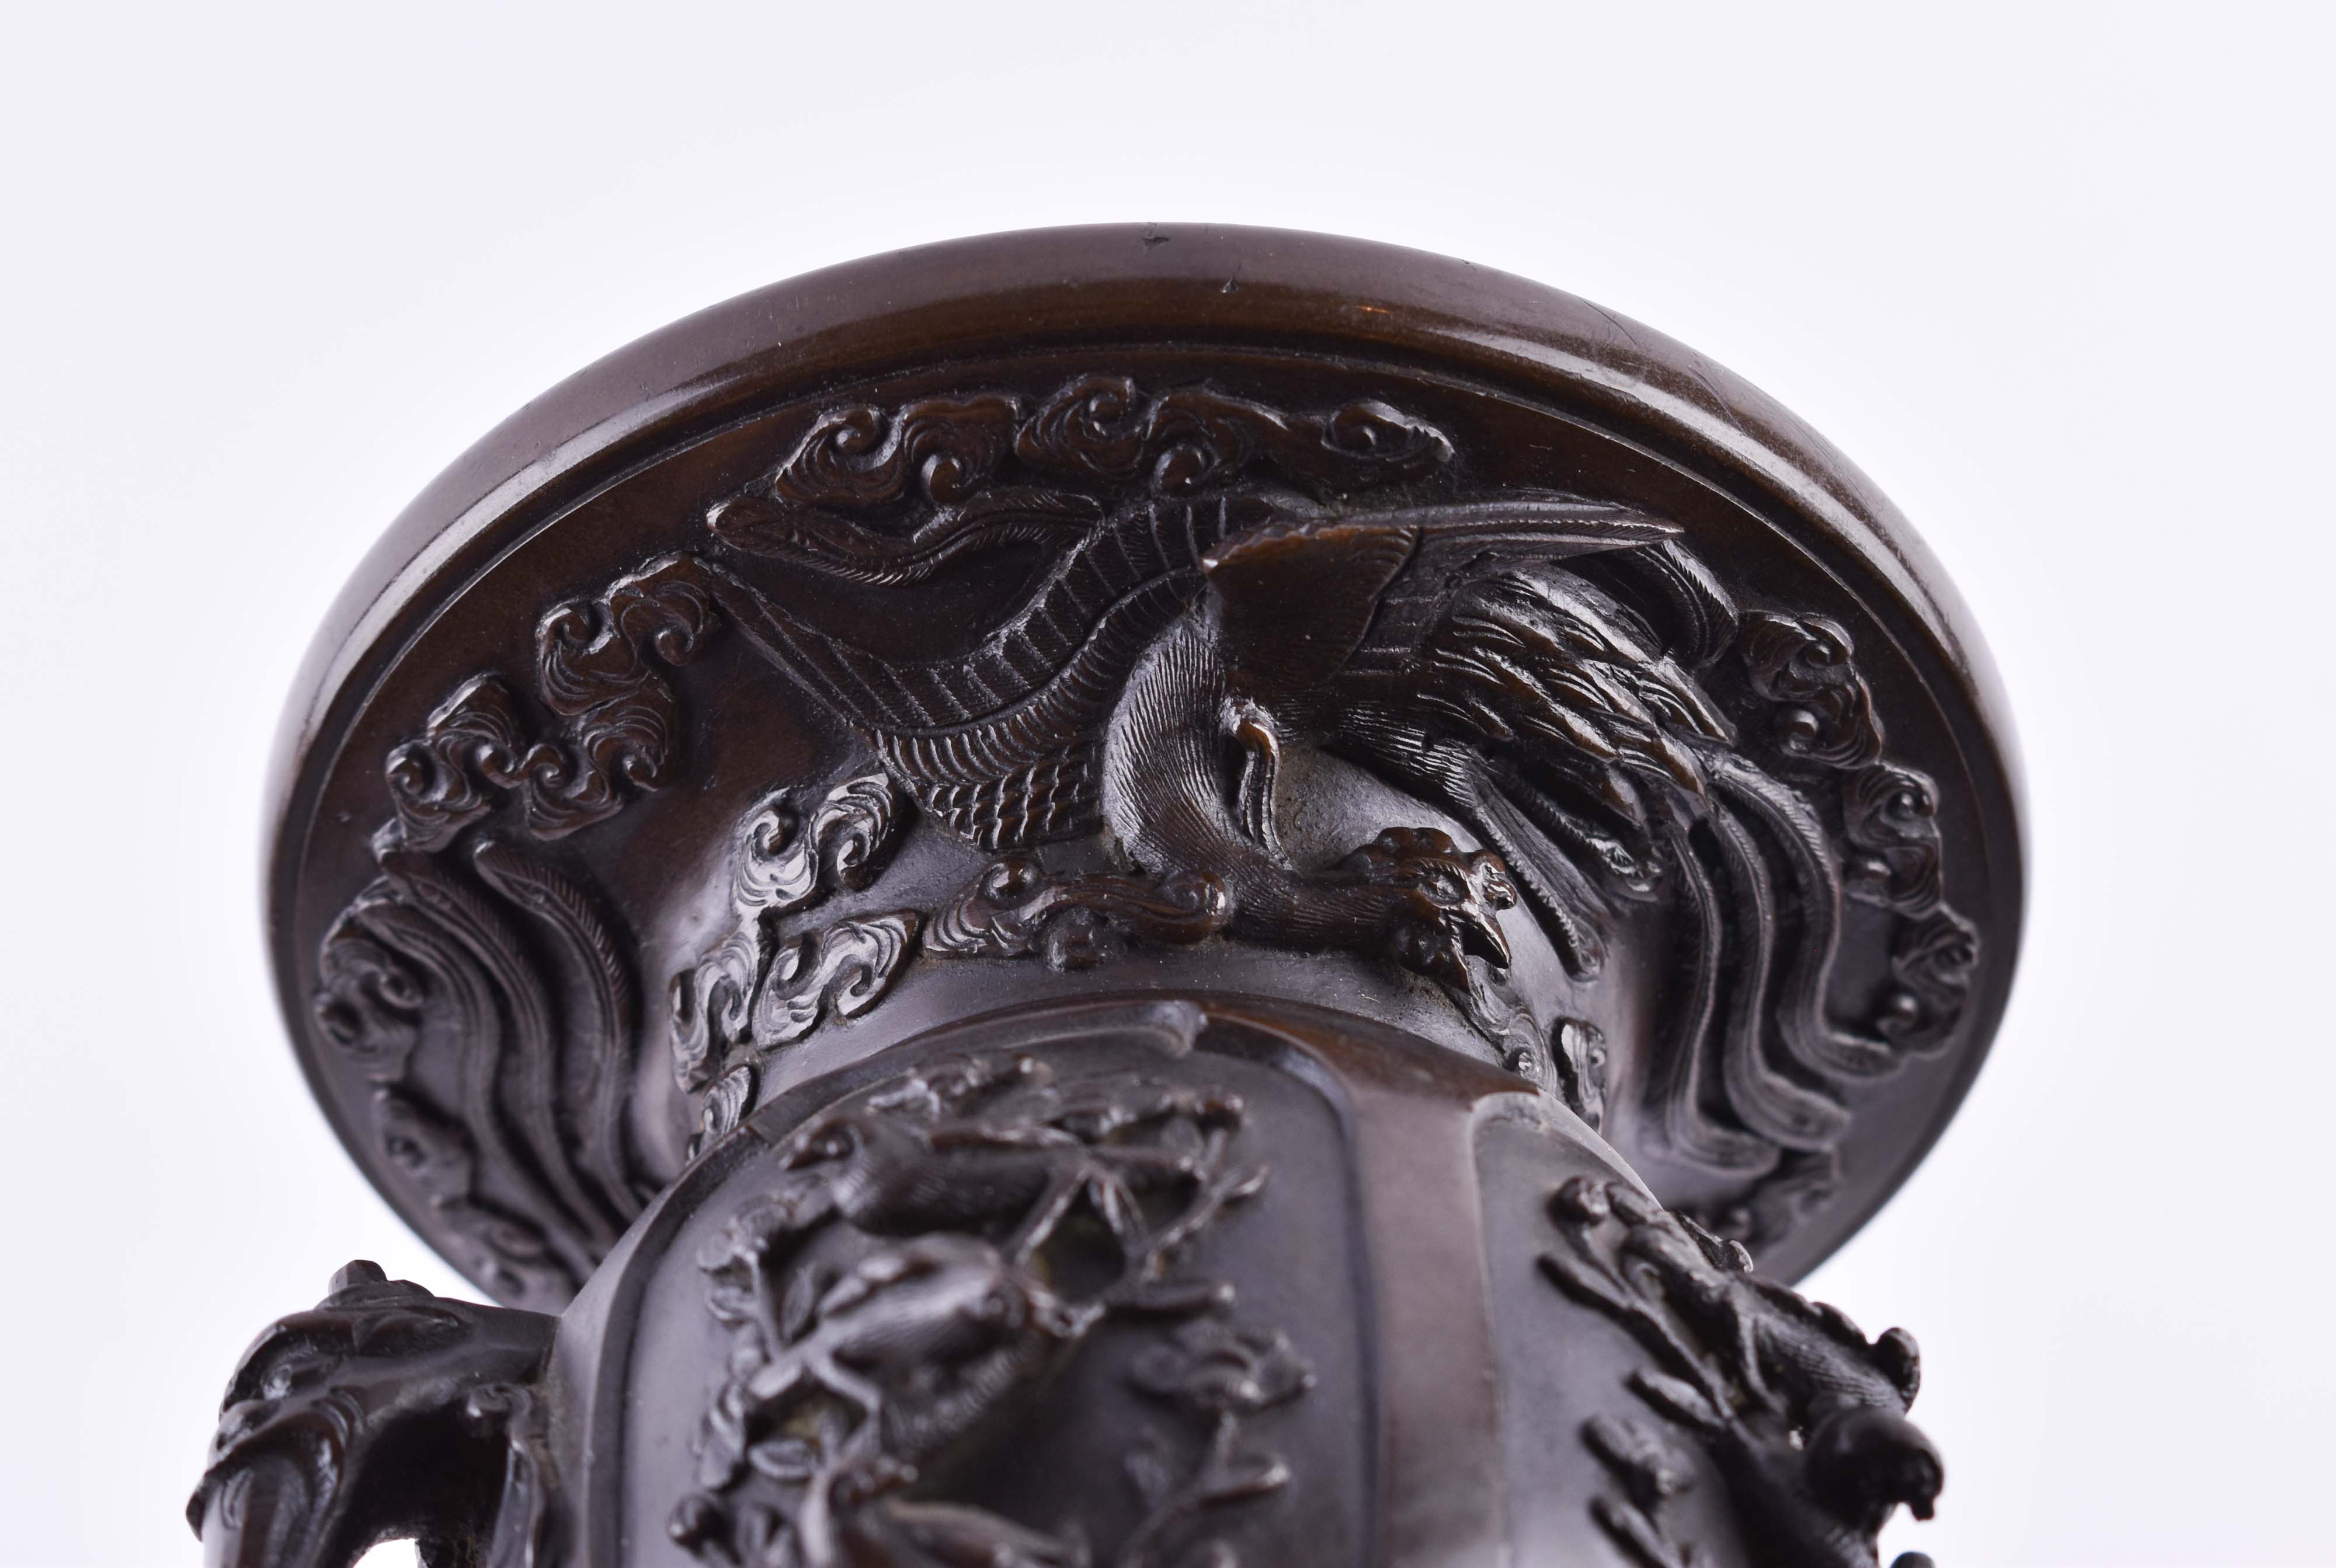  Vase Japan Meiji period - Image 10 of 12